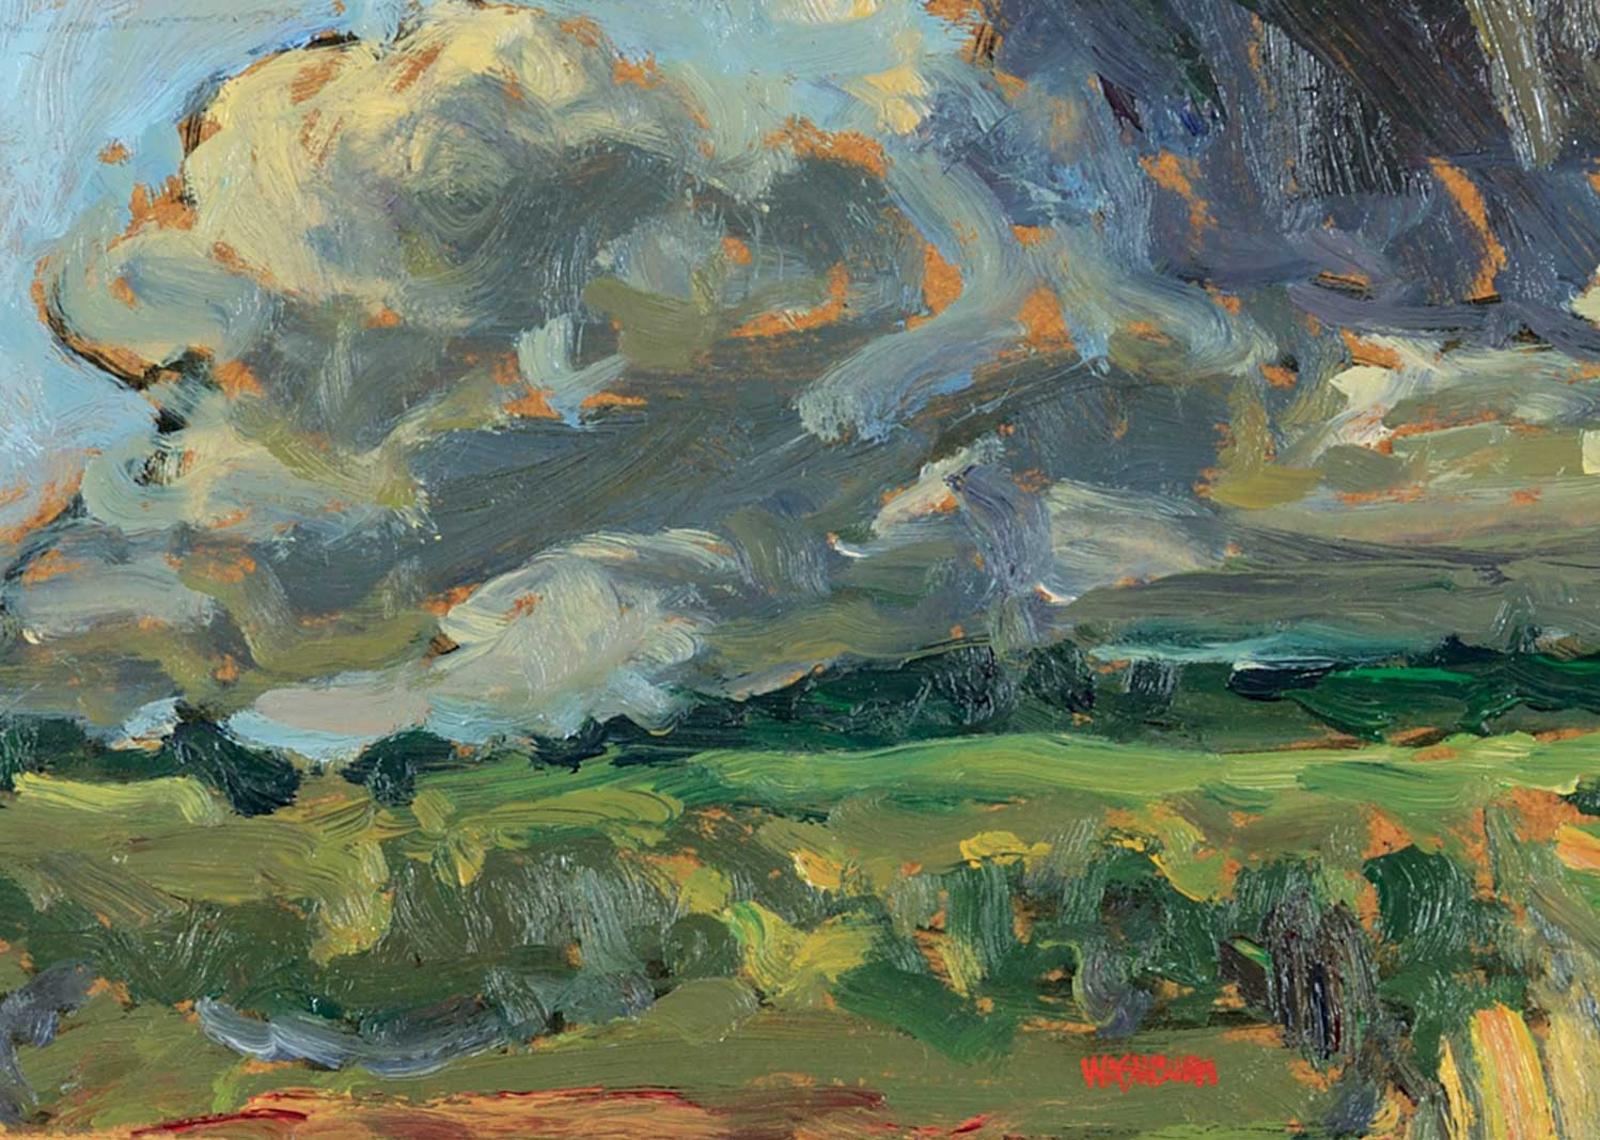 Lawrence Washburn (1940) - Foothills Storm